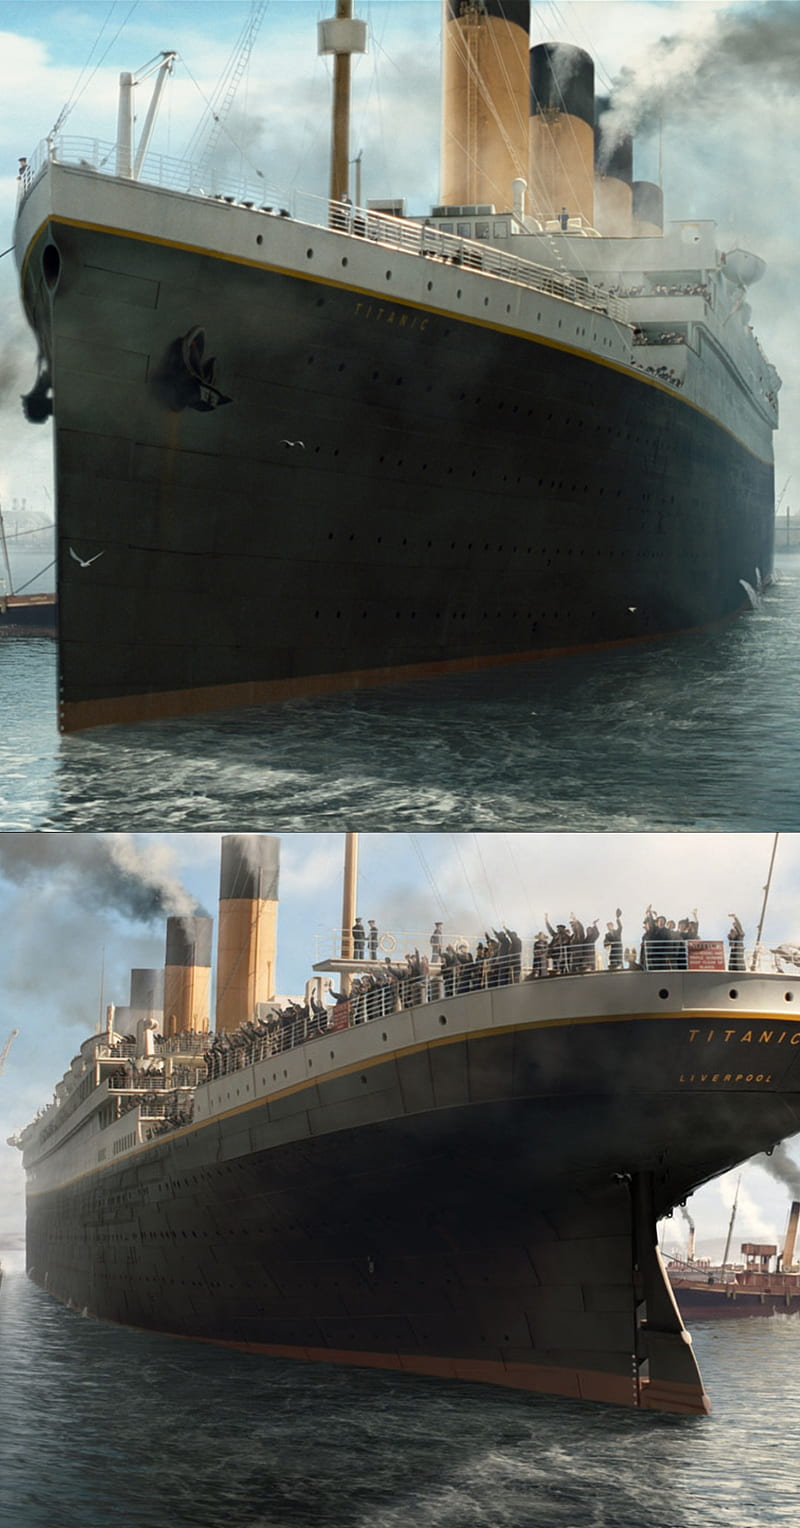 100+] Titanic Wallpapers | Wallpapers.com